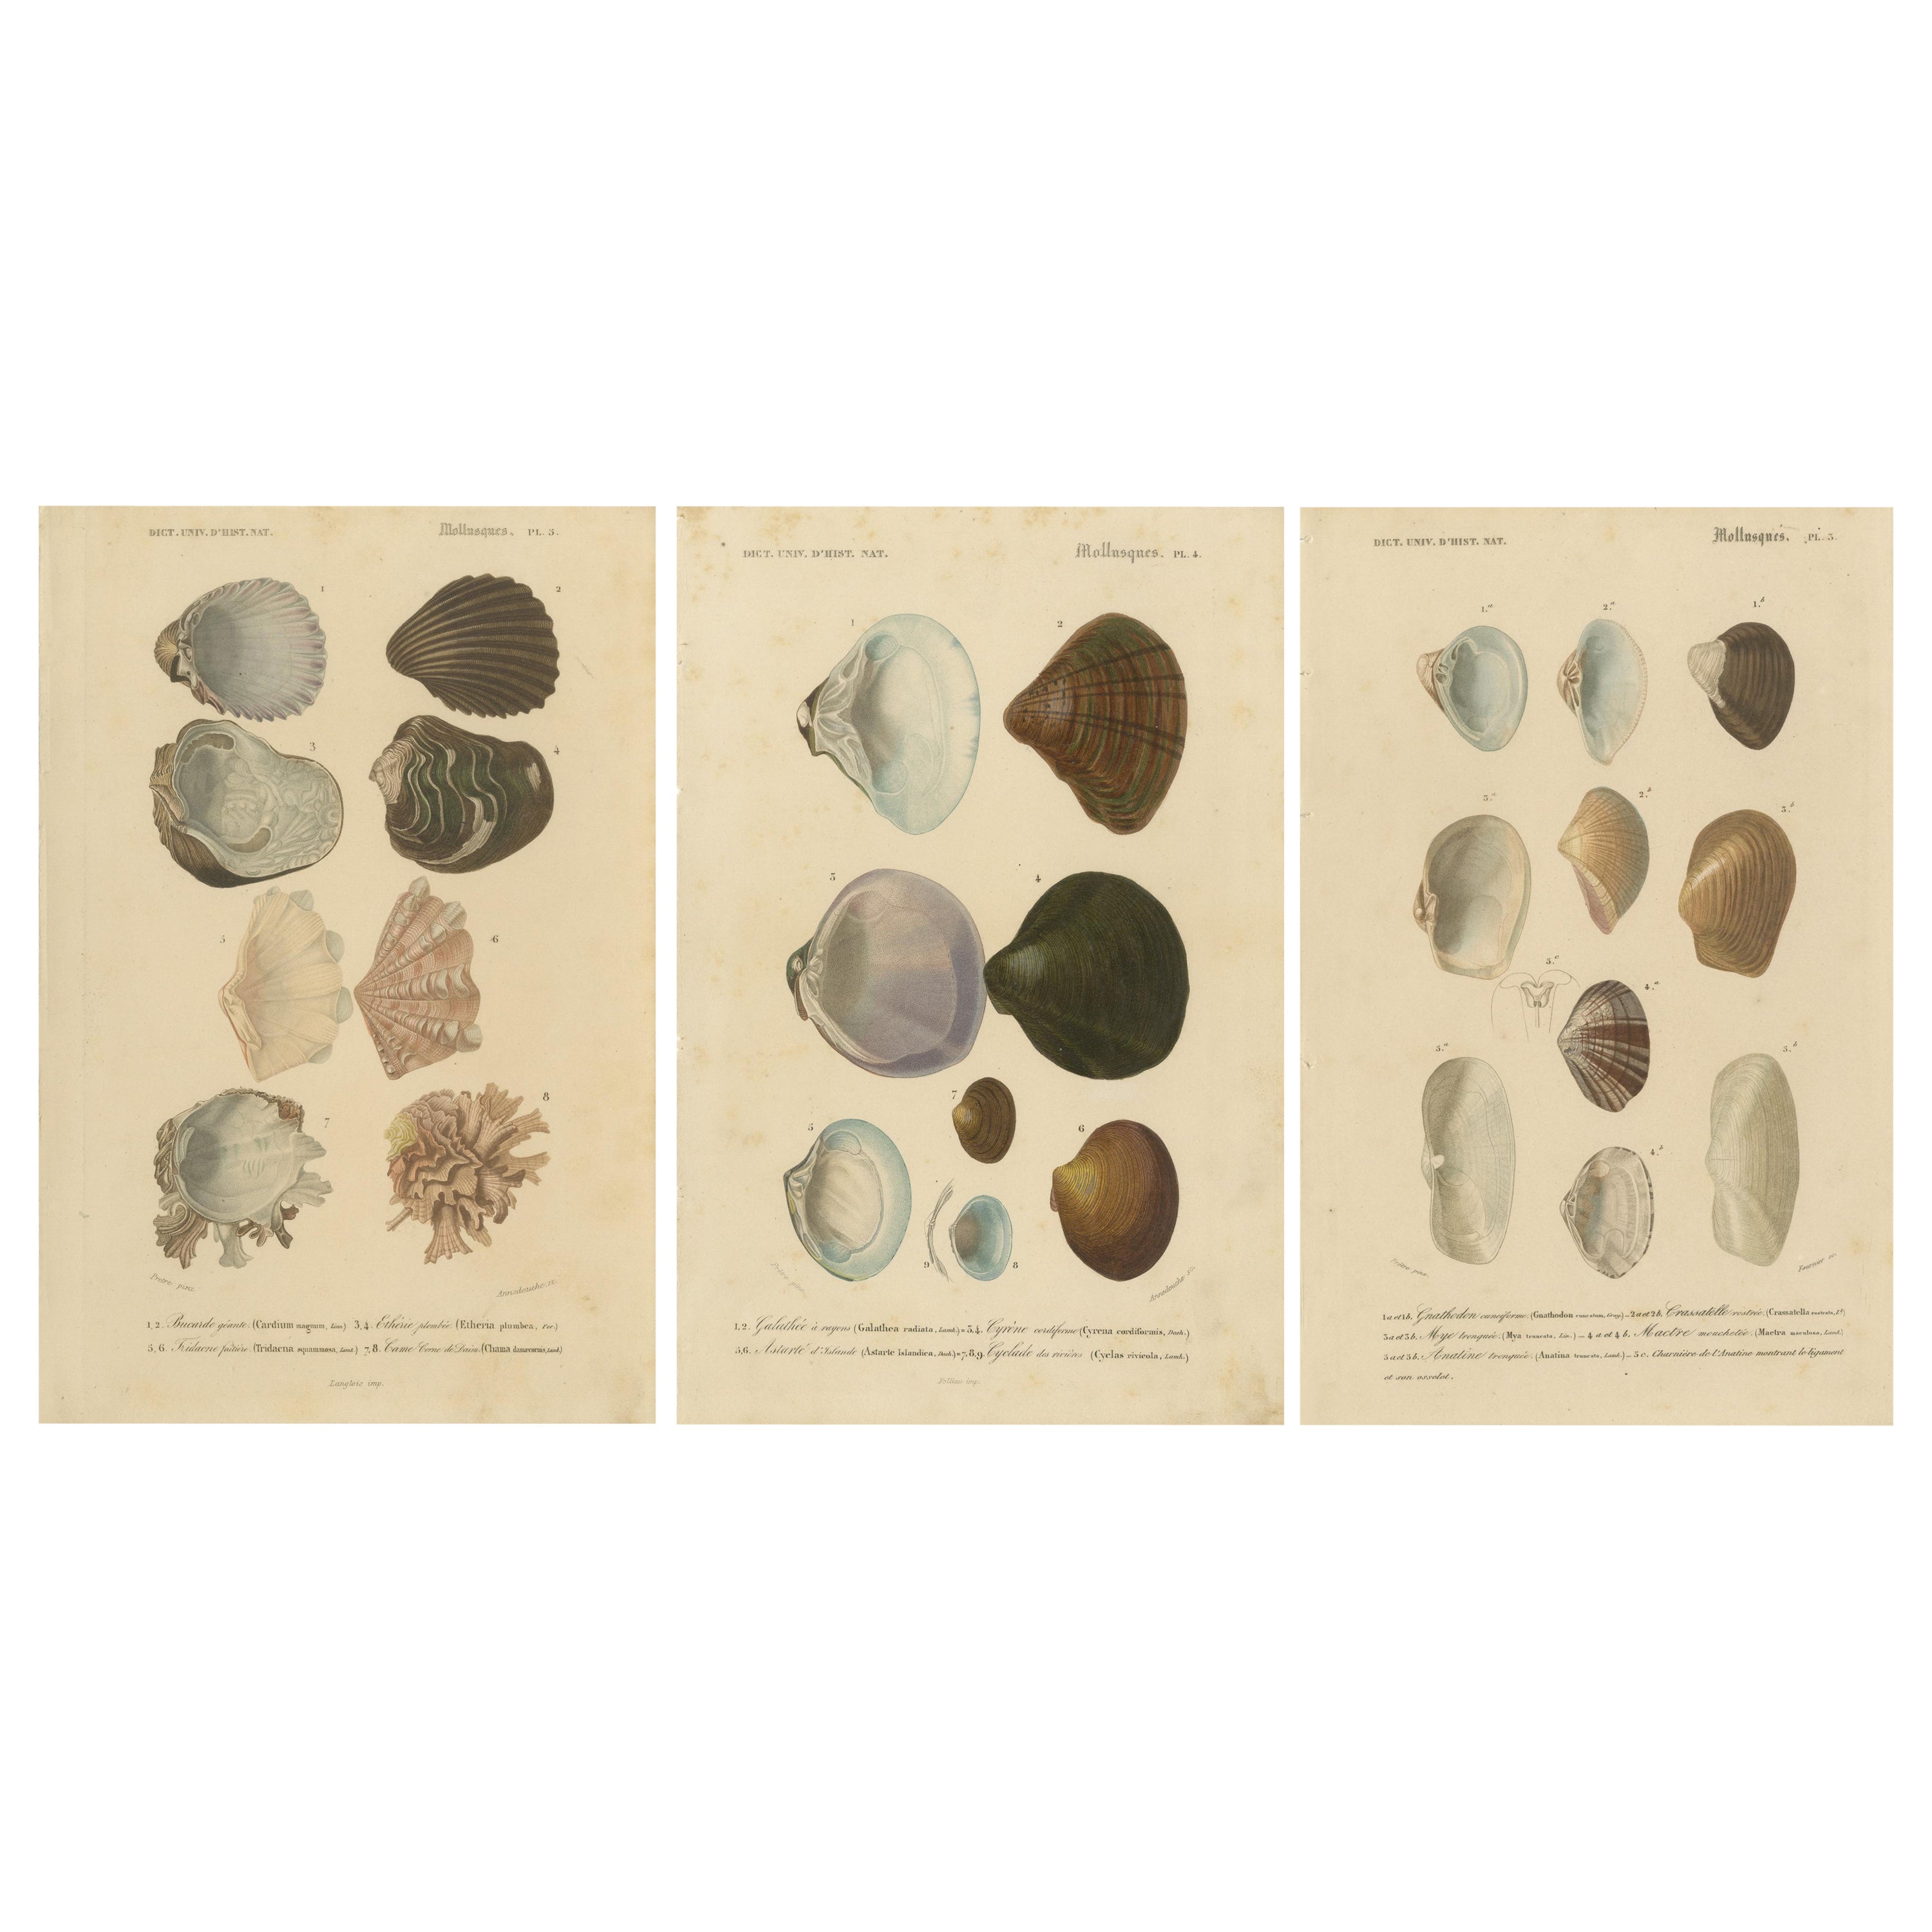 A Treasury of Molluscs: Handkolorierte Illustrationen des 19. Jahrhunderts